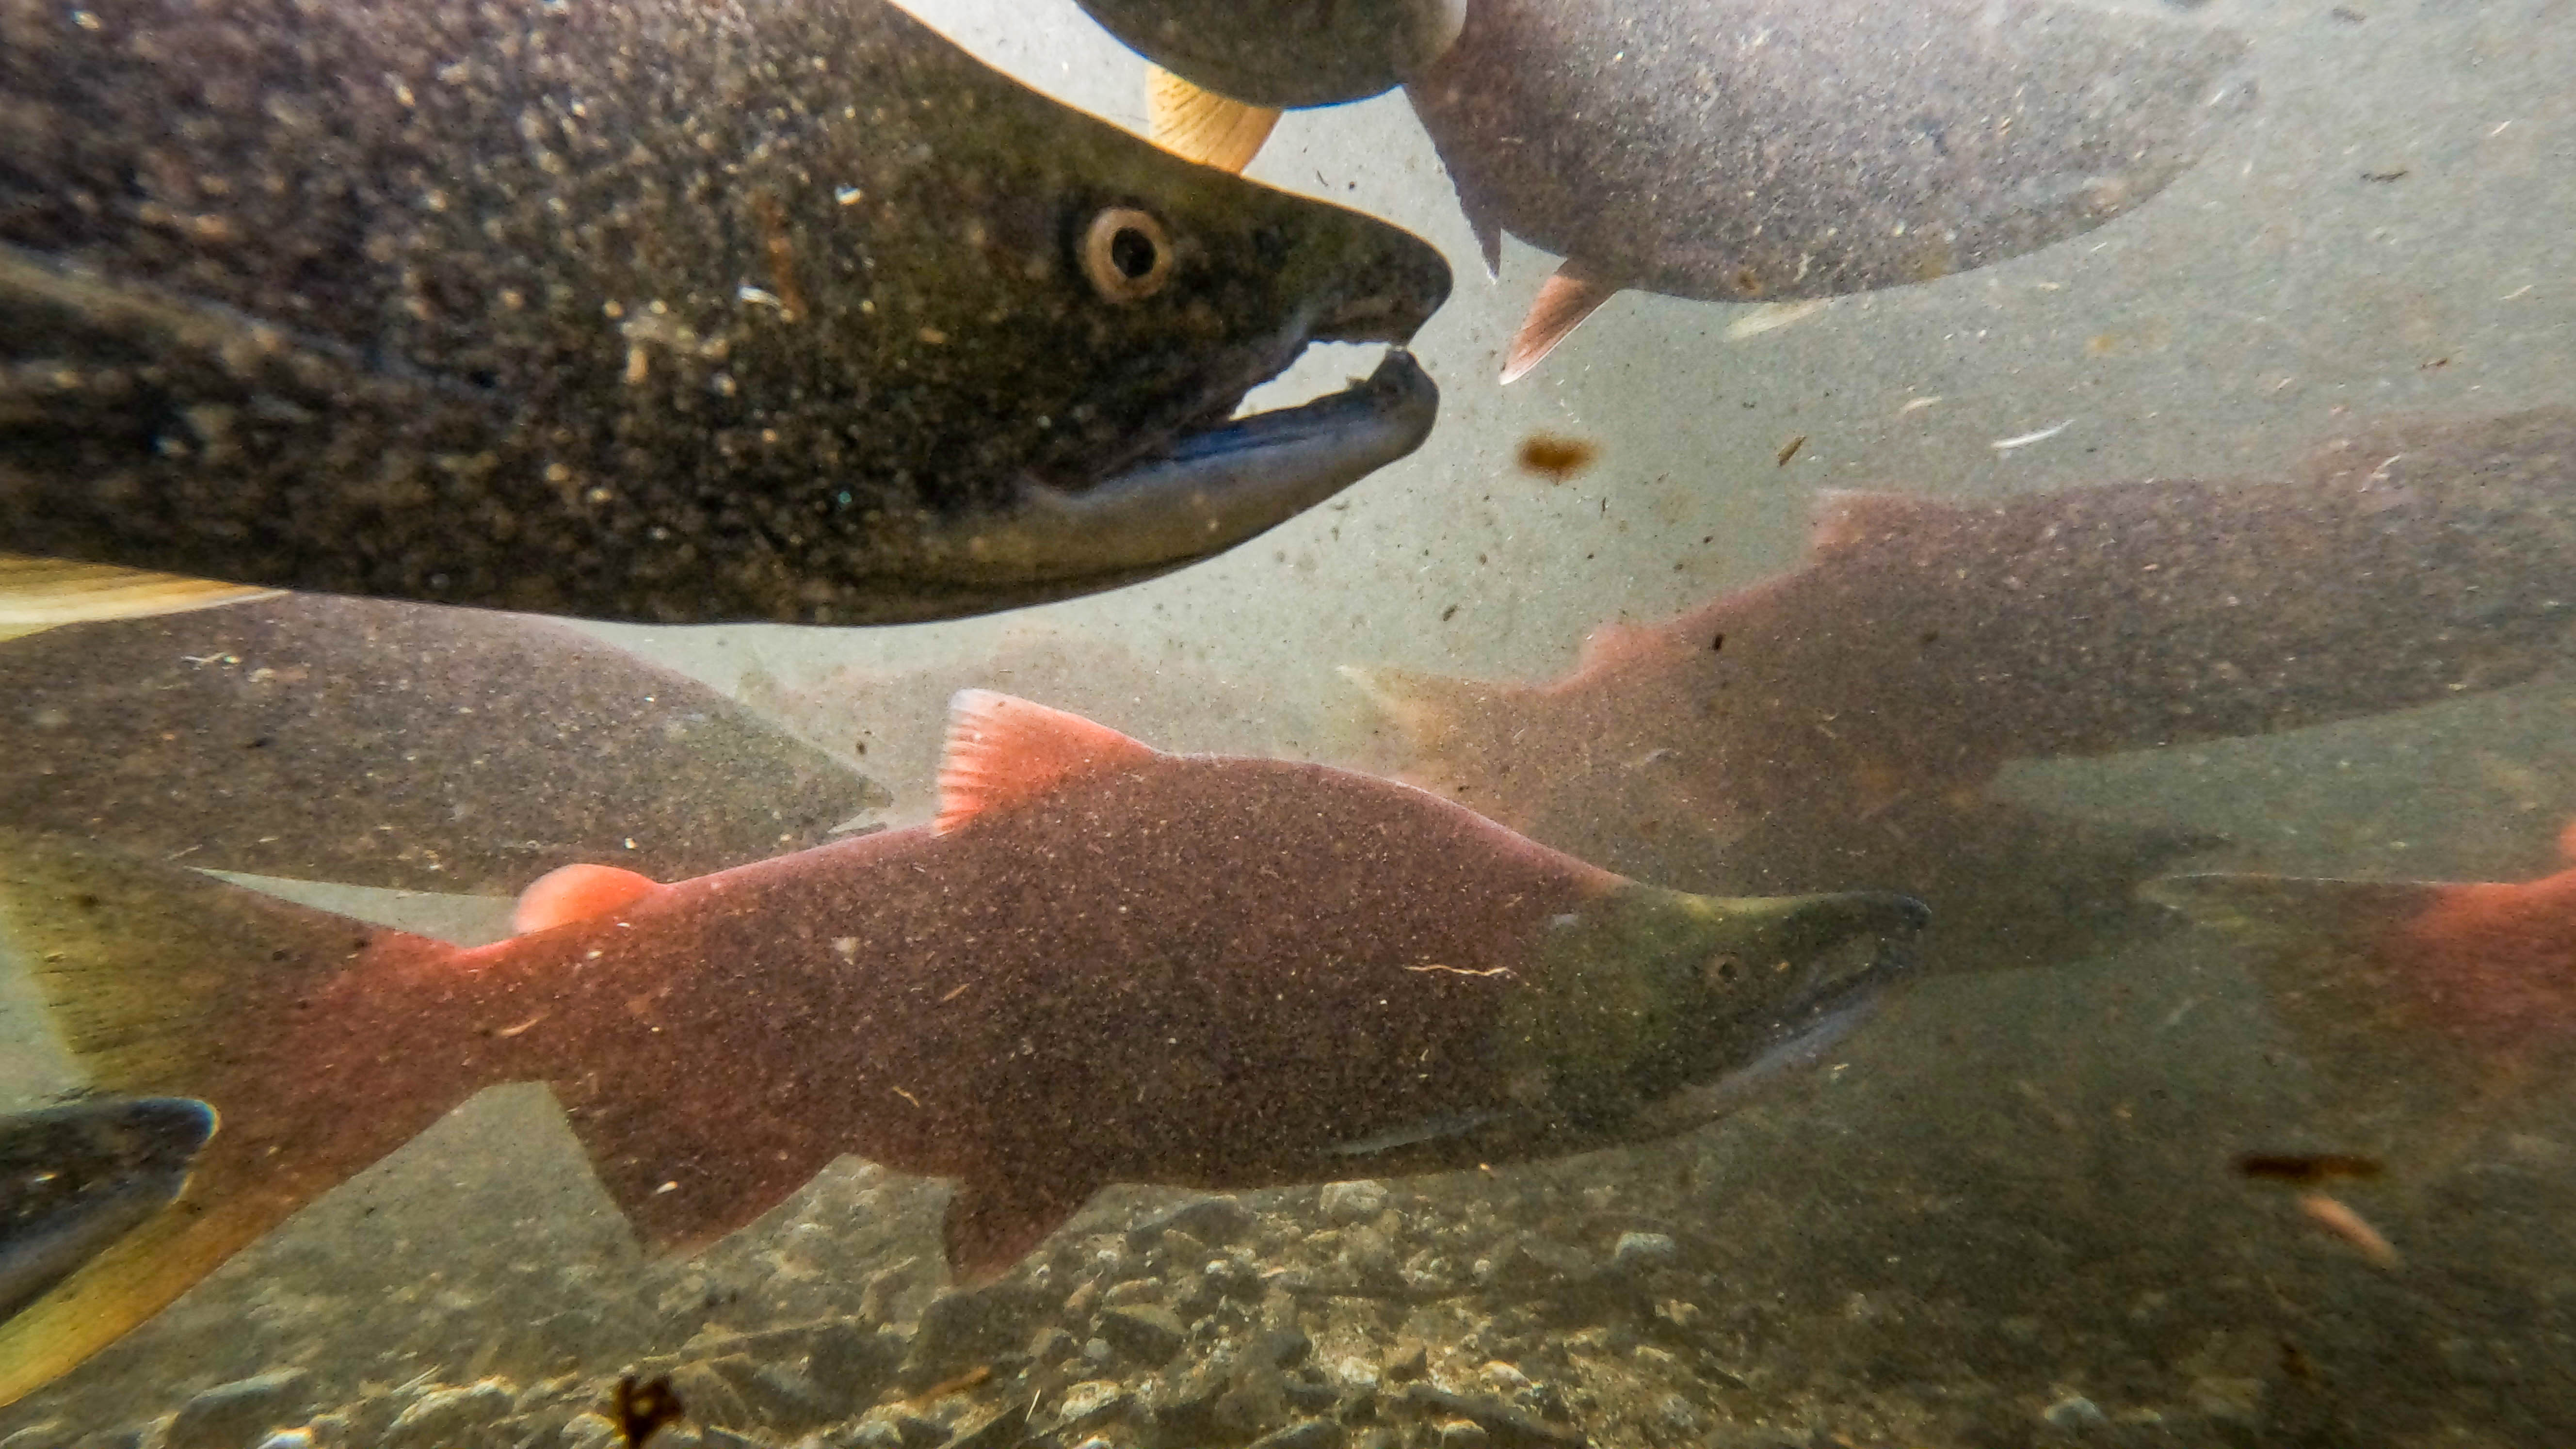 Alaska salmon LIVE UPDATES: Overall salmon harvest 17% above last year's